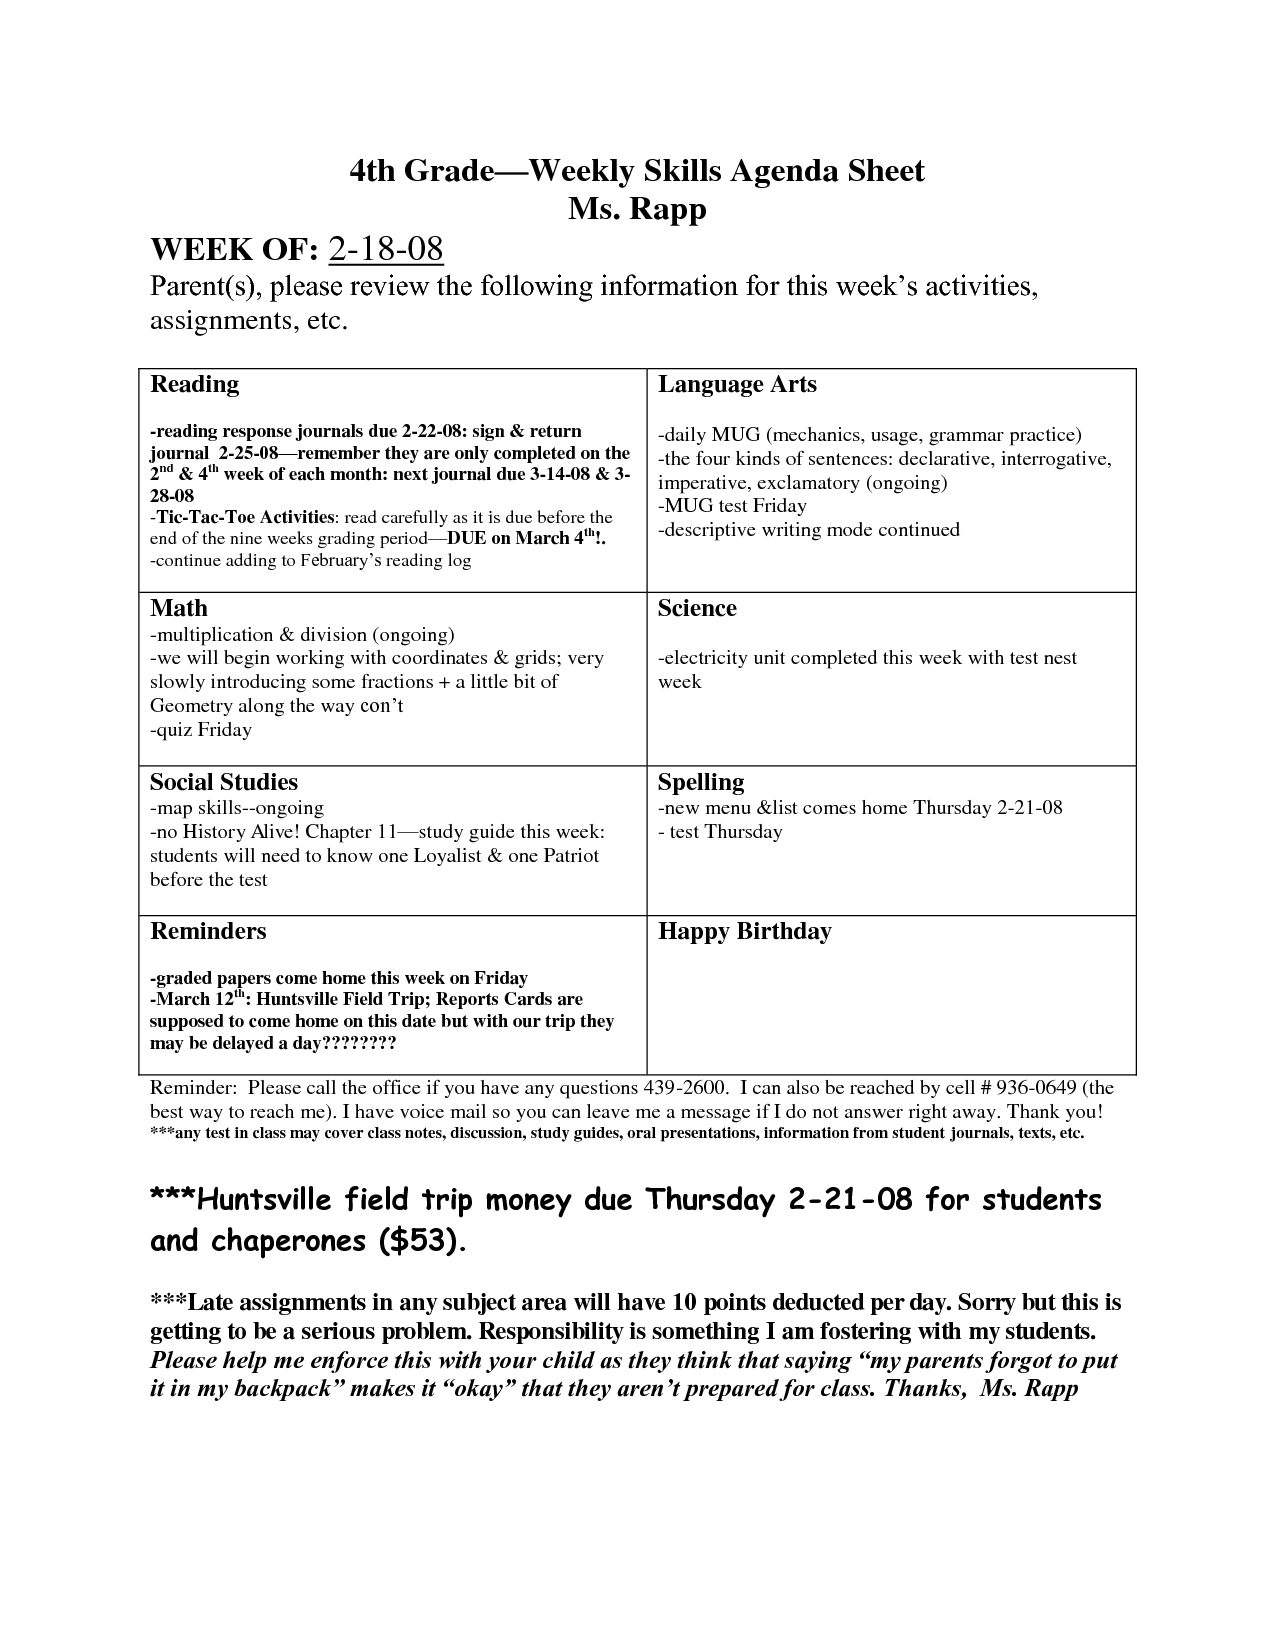 5th Grade Reading Worksheets Image